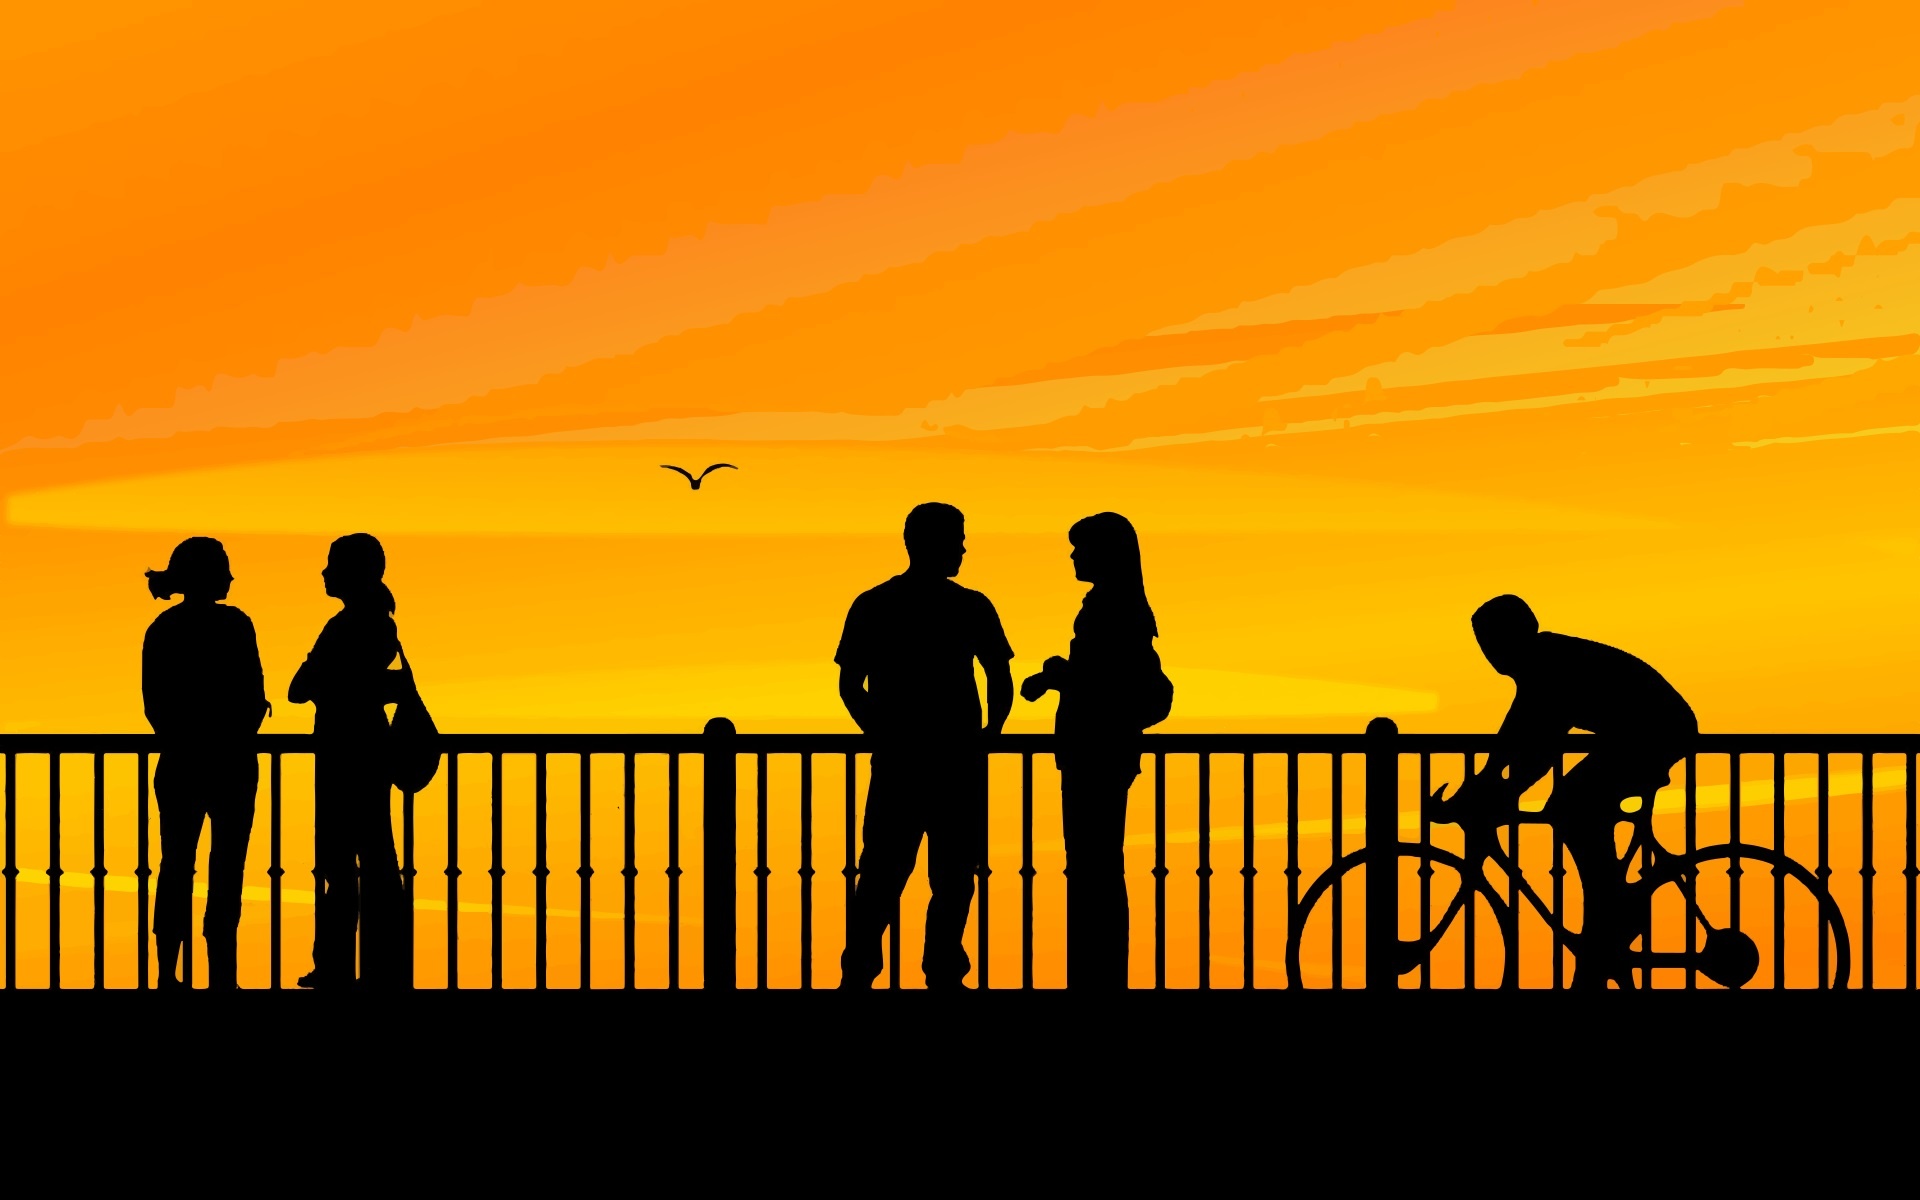 boardwalk sunset silhouette free photo